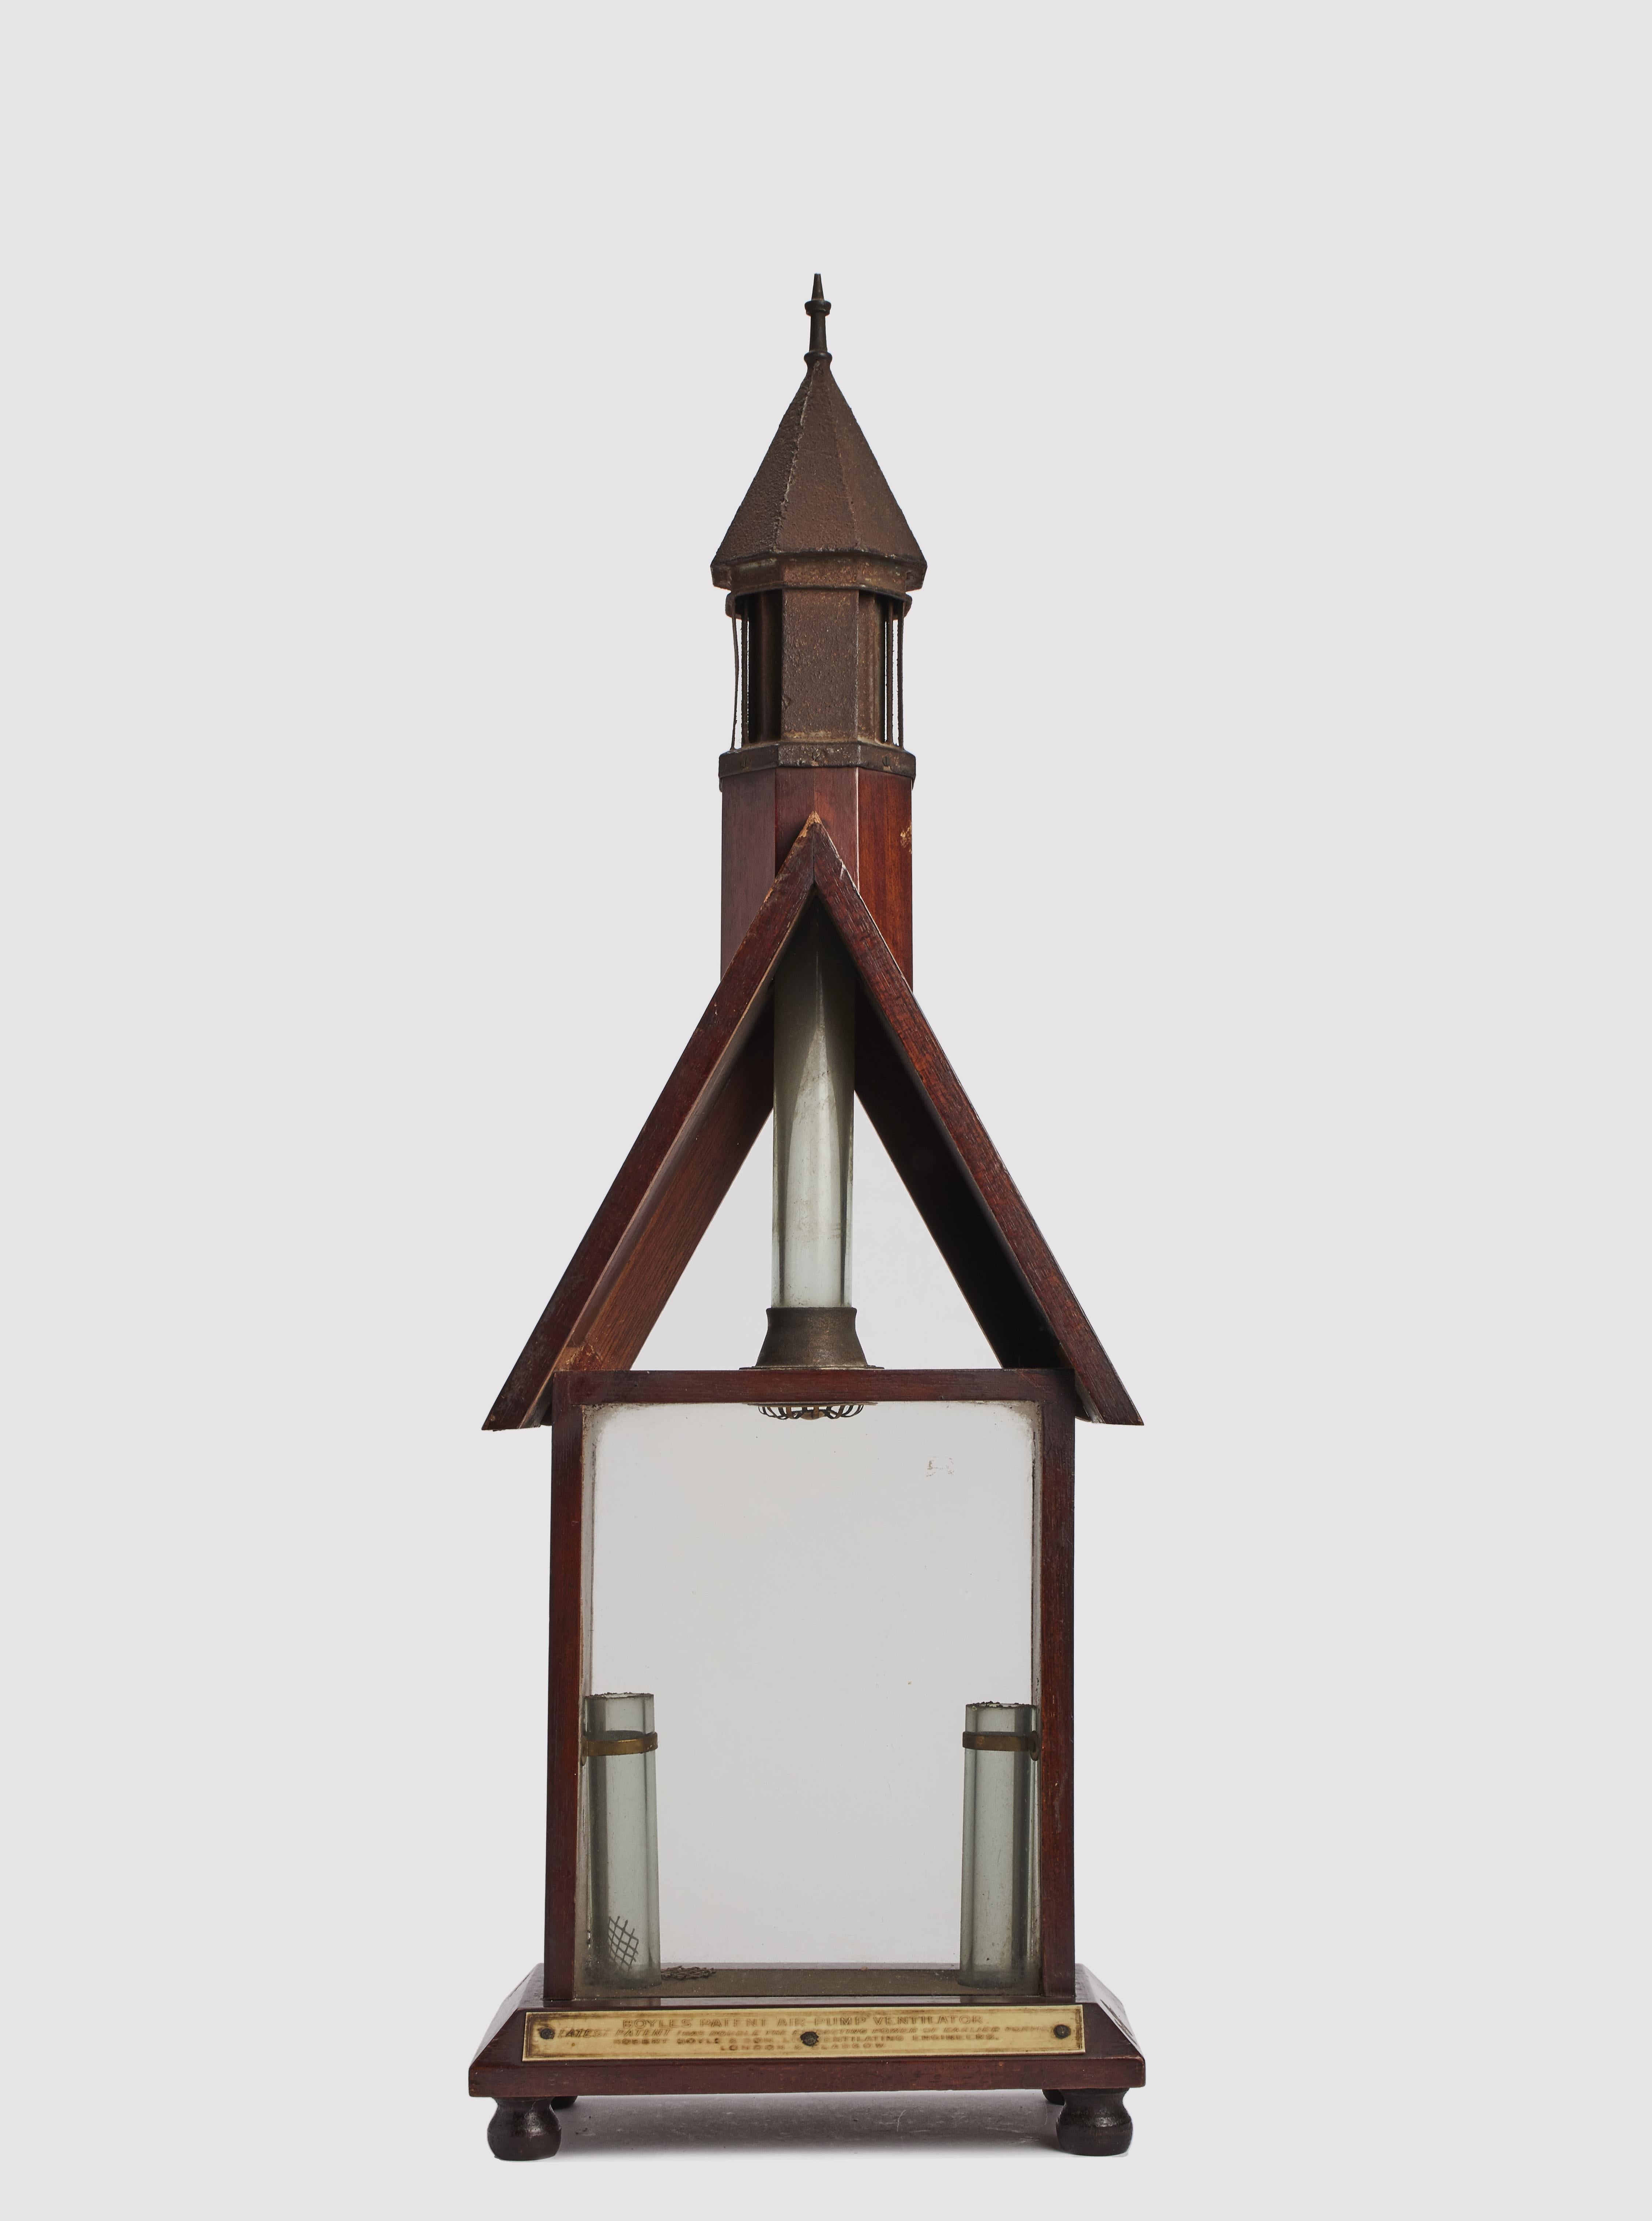 Boyle’s patent air pump ventilator mahogany wood, glass an iron, depicting architecture model. Robert Boyle & son Ventilating engineeres. London & Glasgow, end XIX century.